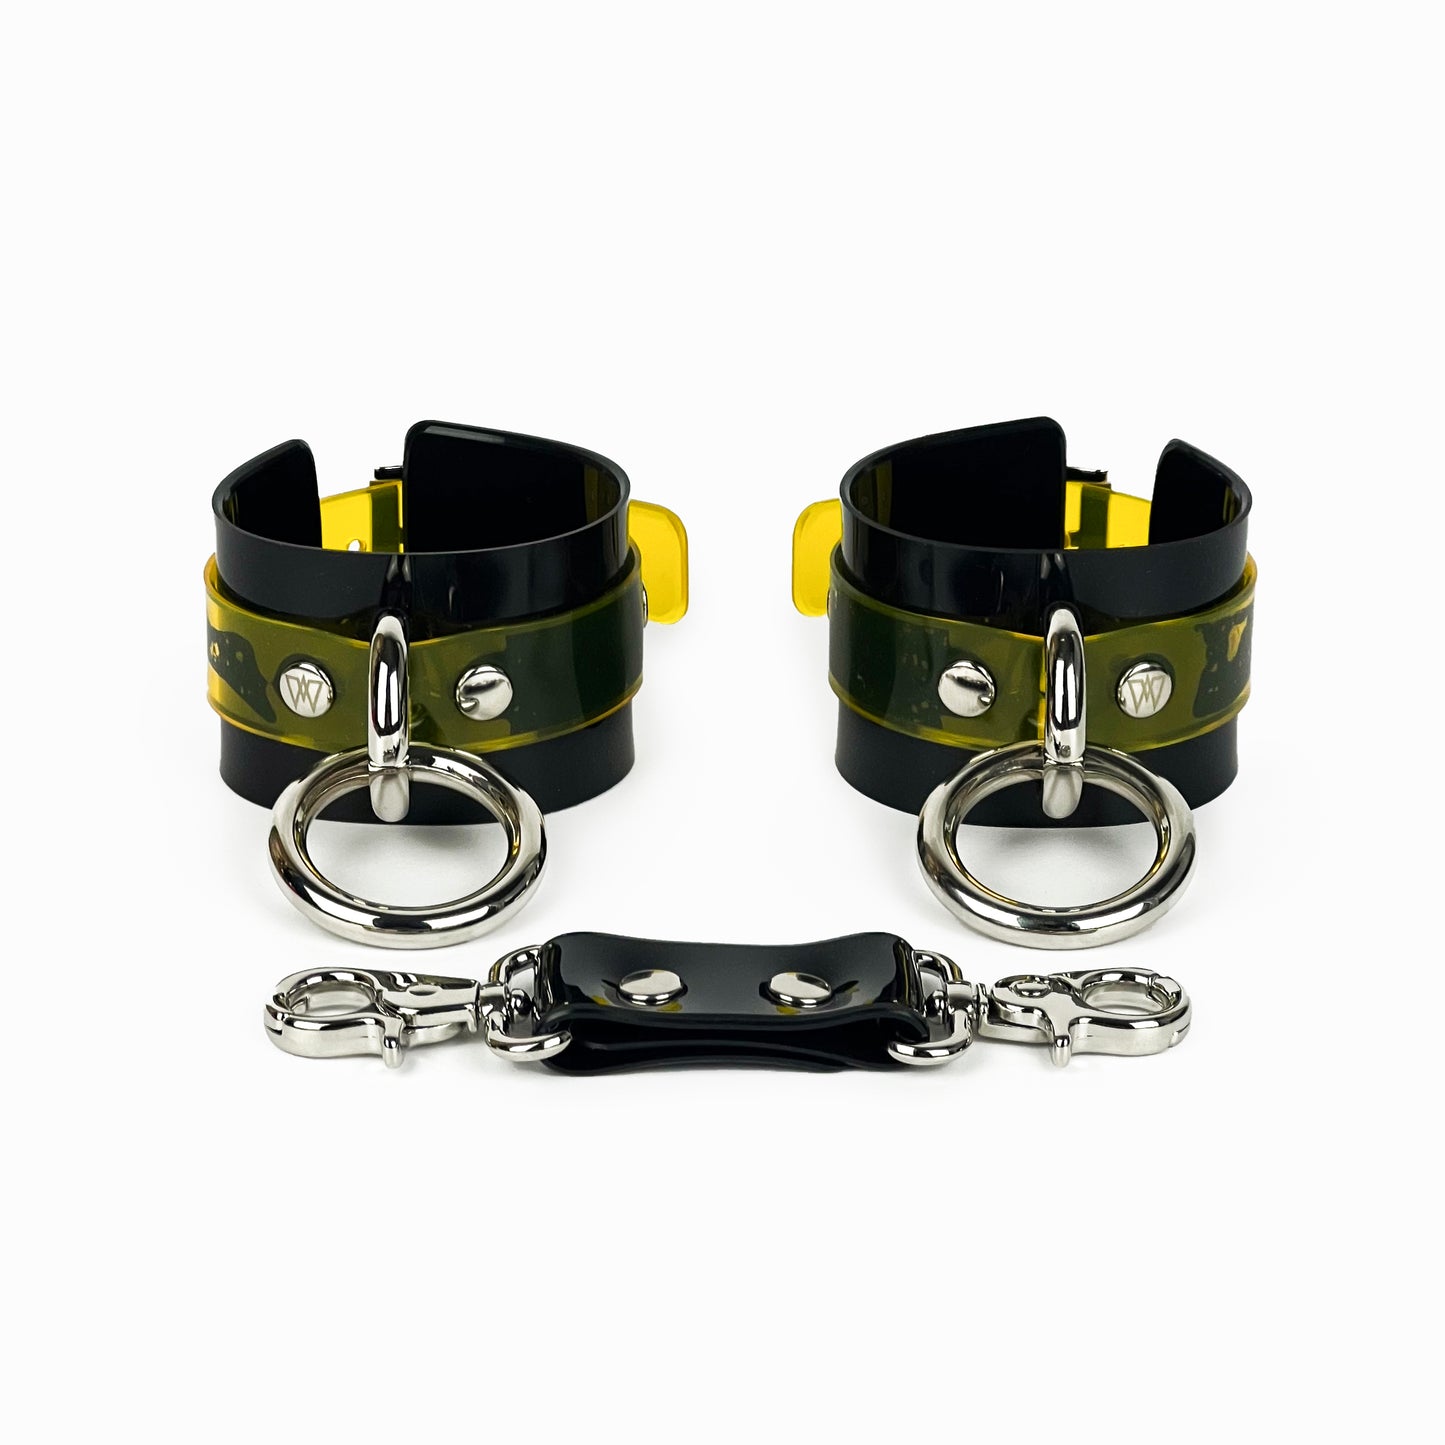 O-ring handcuffs